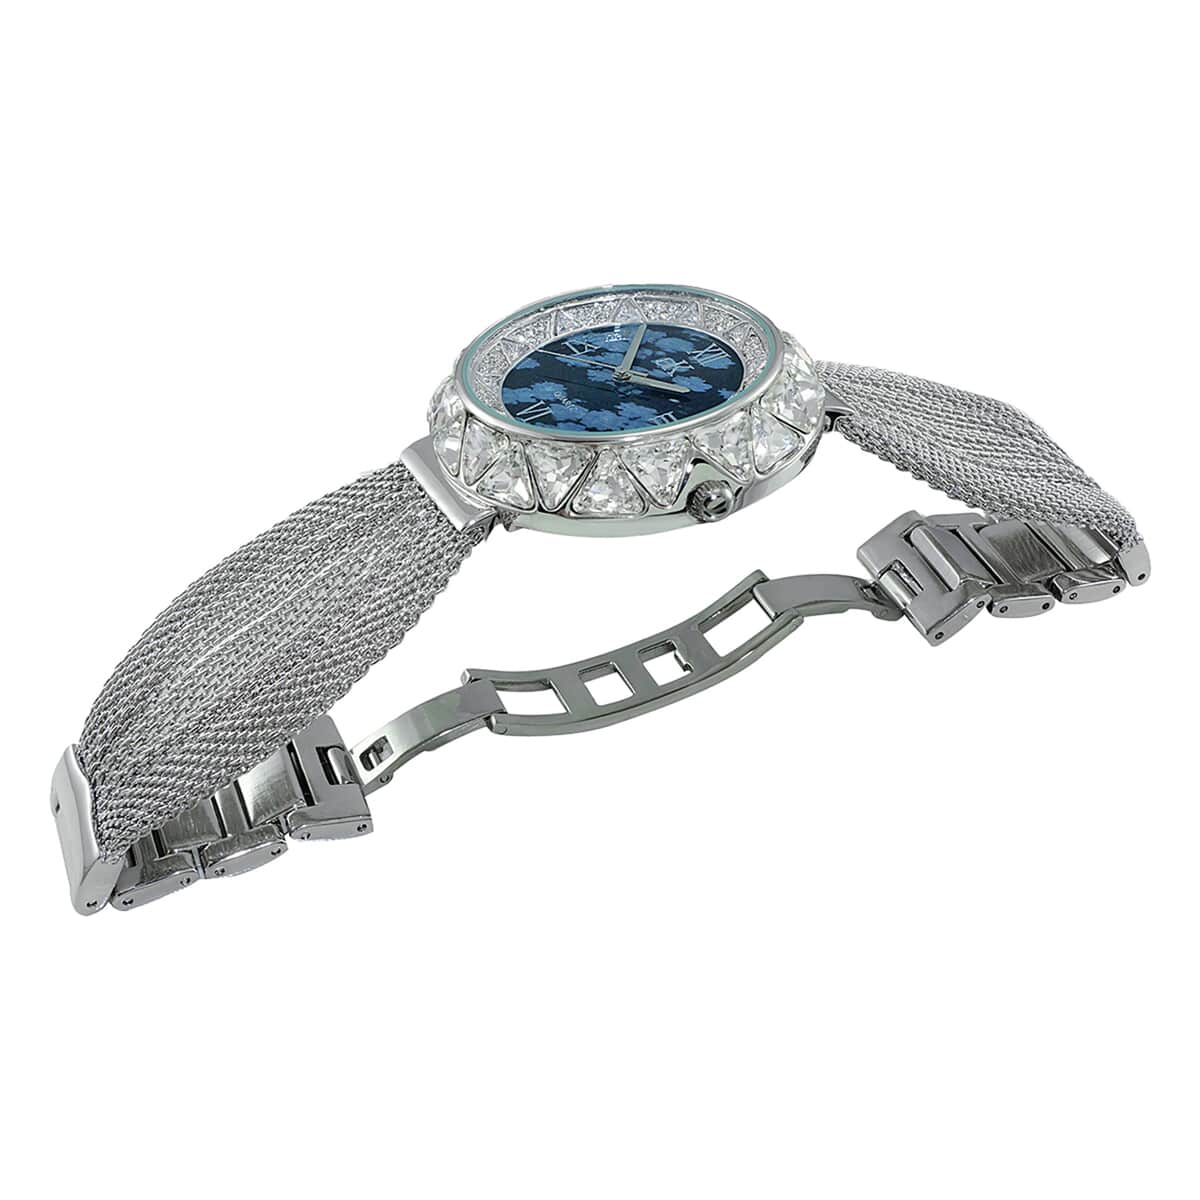 ADEE KAYE Austrian Crystal Japan Quartz Movement Black Dial Watch in Silvertone Strap (40.9 mm) | Women's Designer Watch | Analog Luxury Wristwatch image number 1